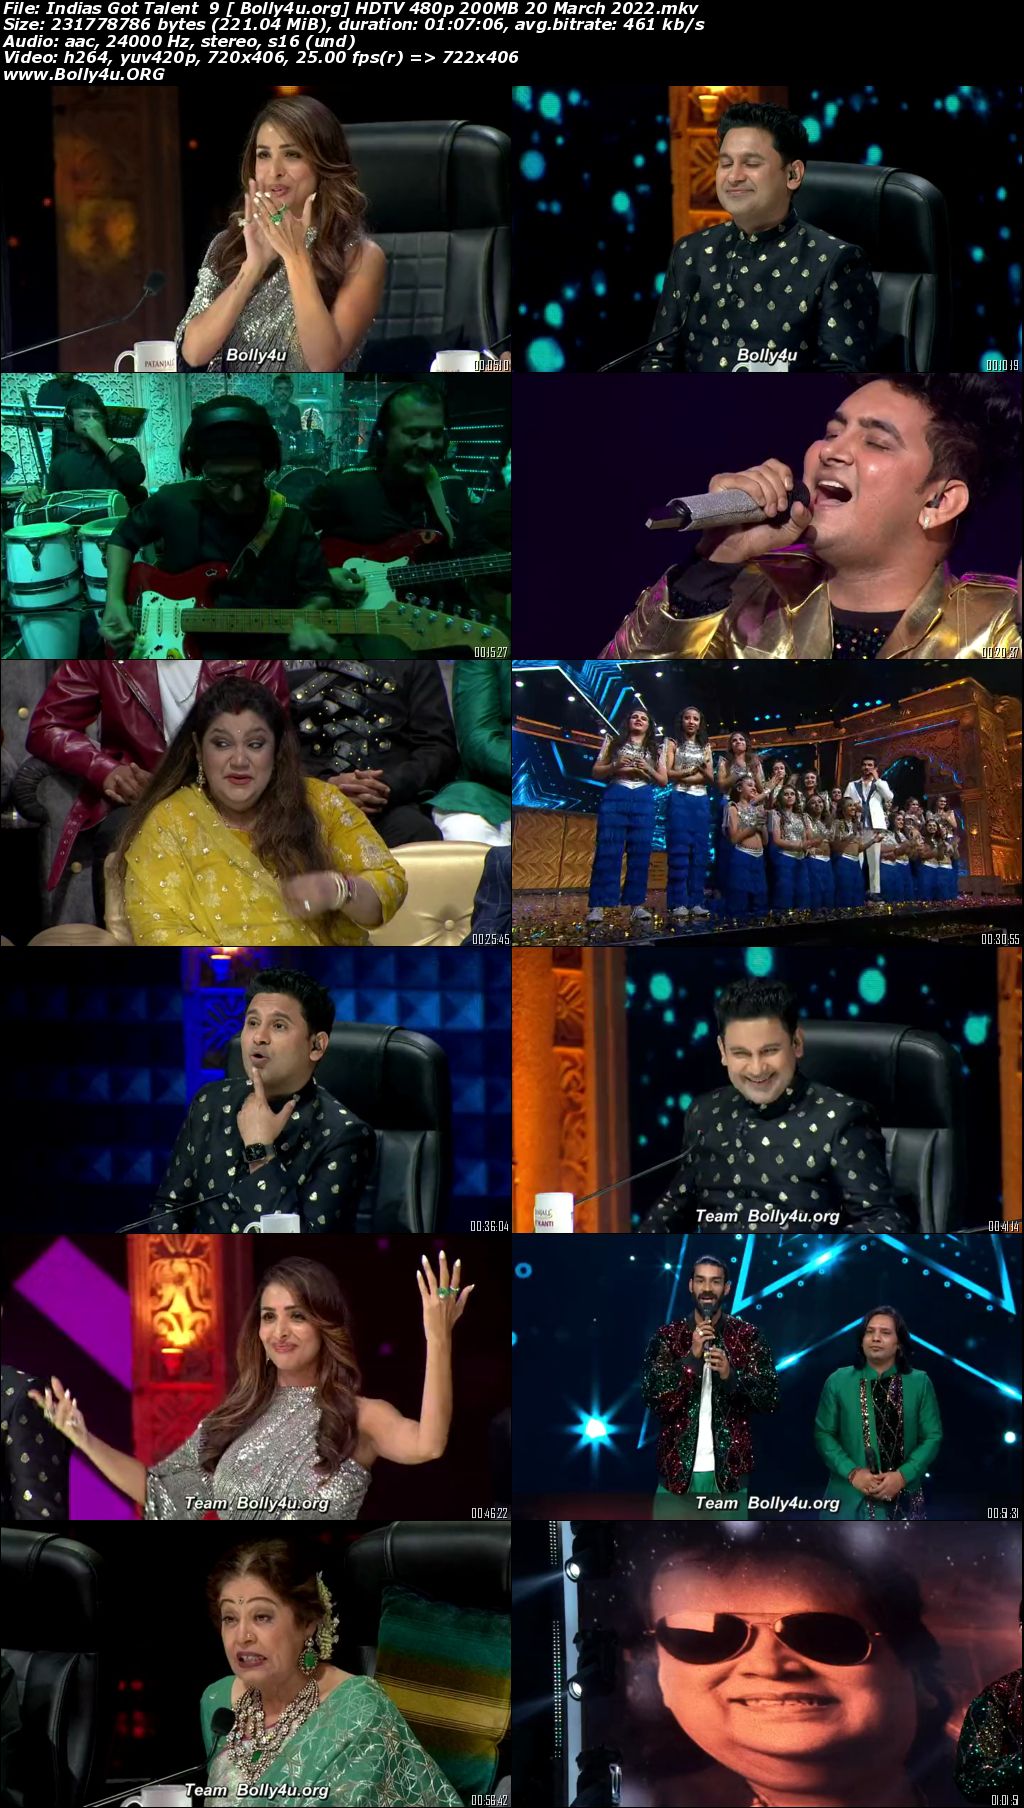 Indias Got Talent 9 HDTV 480p 200MB 20 March 2022 Download